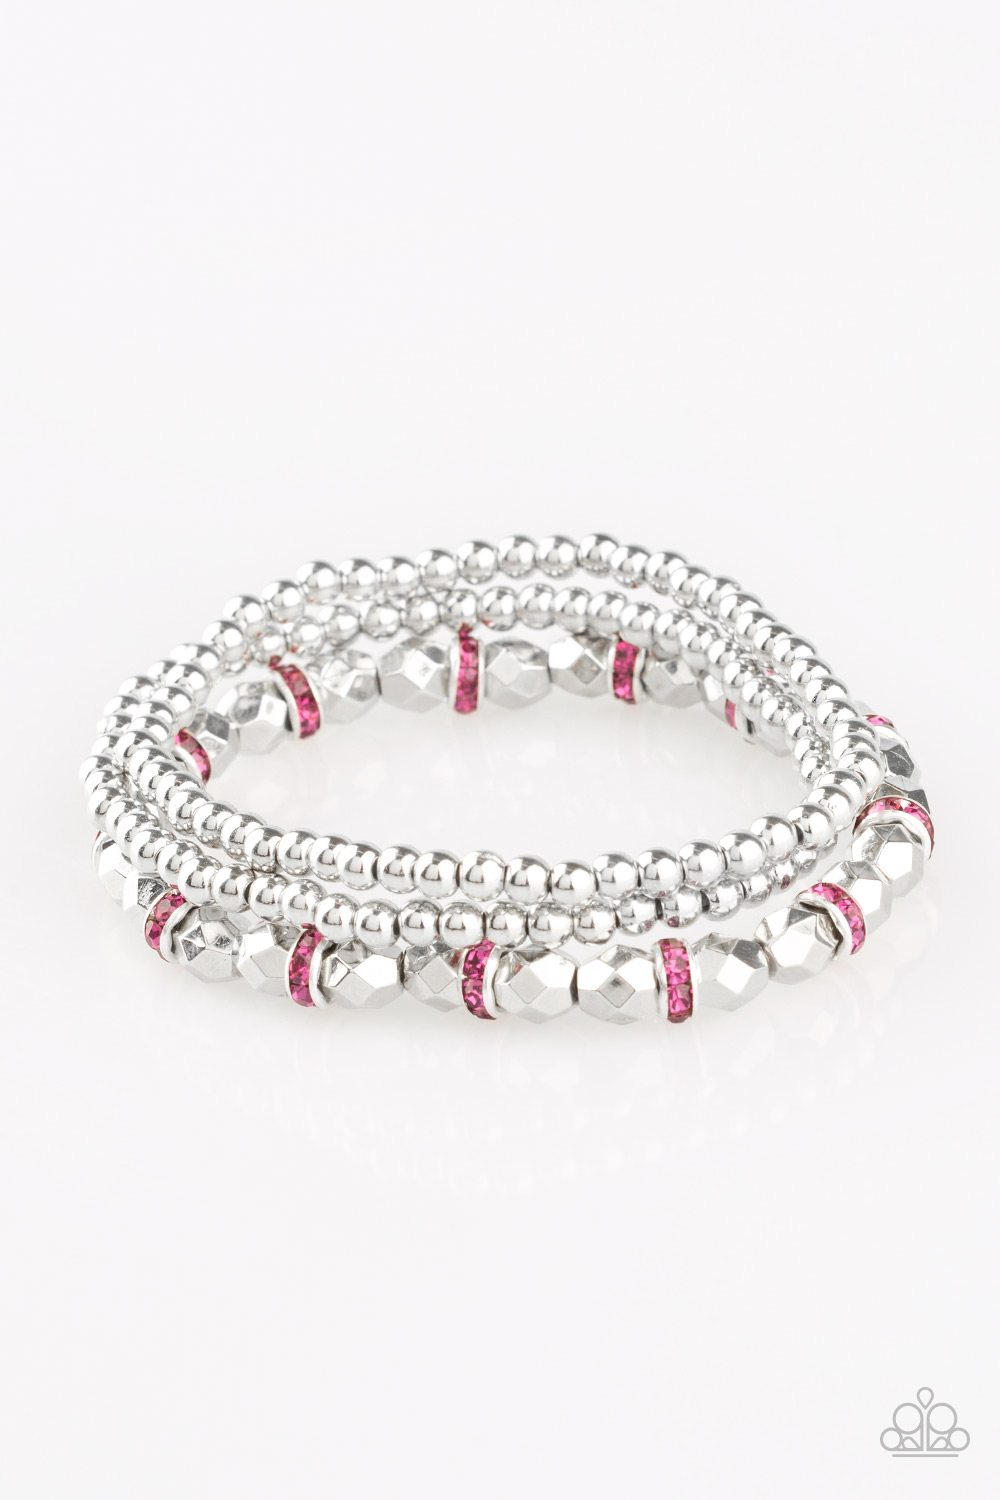 Bracelet - Let There BEAM Light - Pink